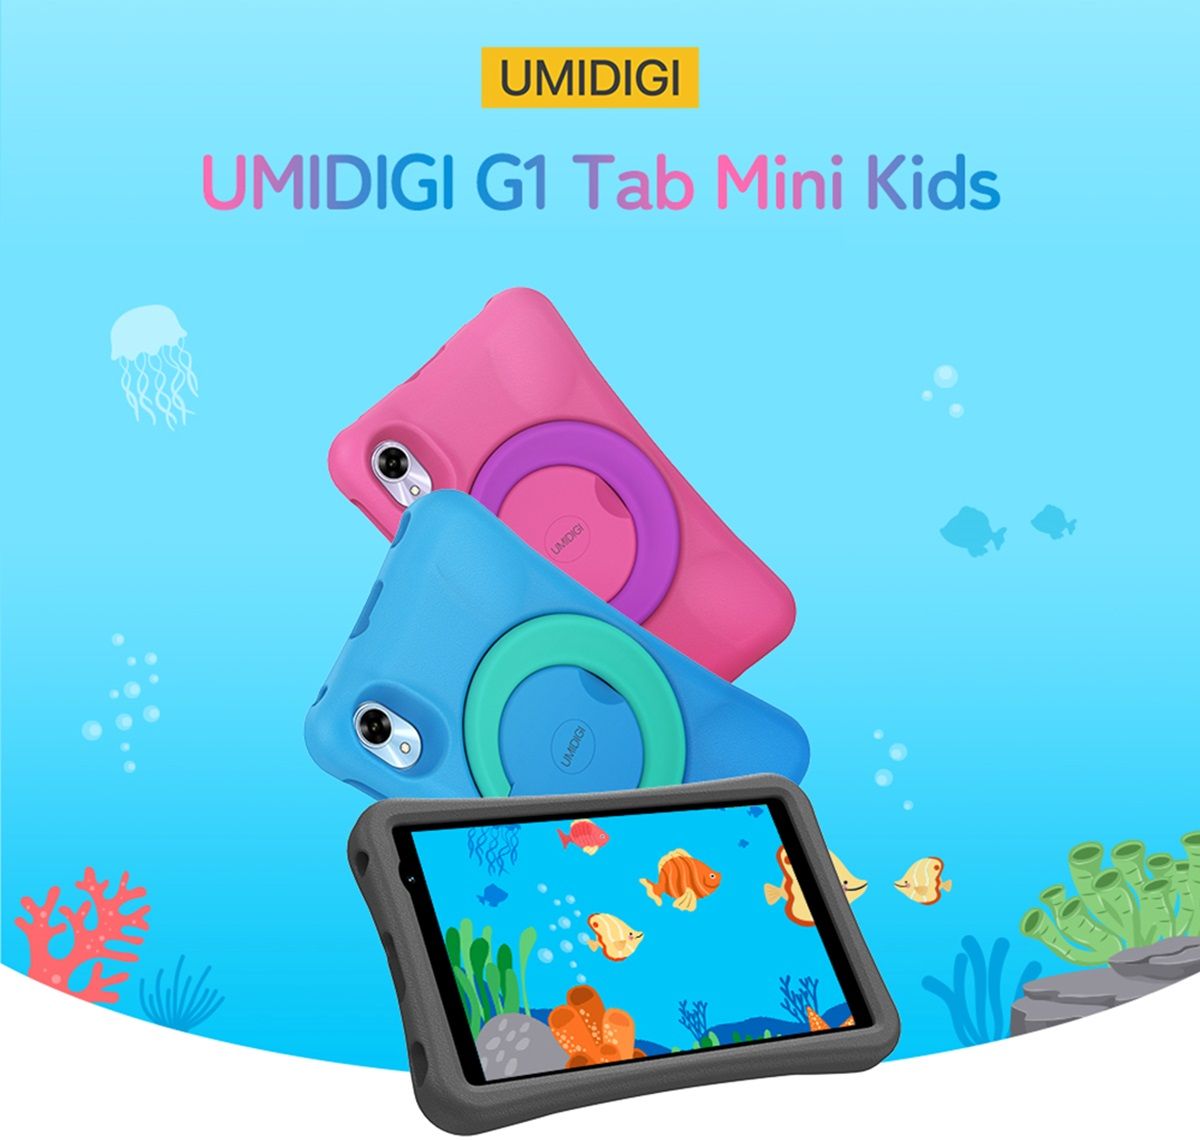 UMIDIGI G1 Tab Mini Kids